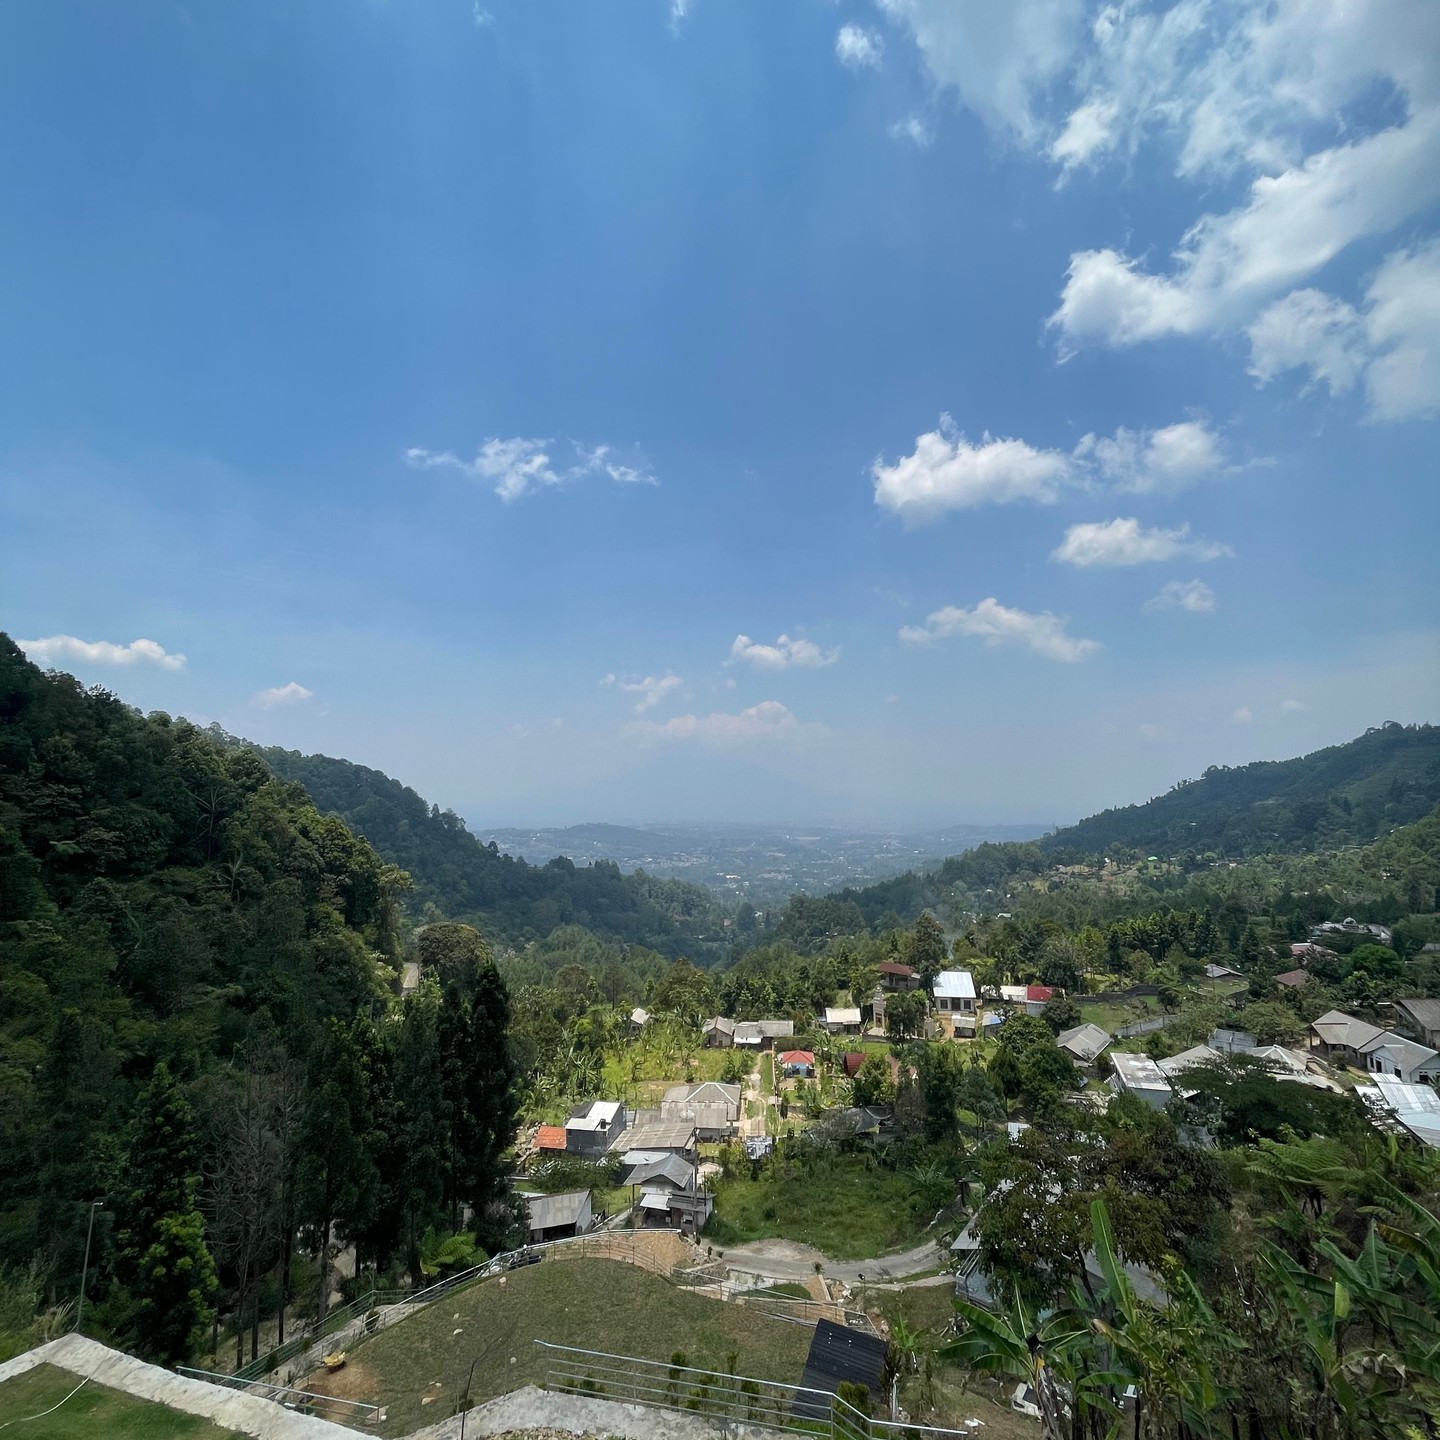 Review Paseban Mountain View Camping Ground Image From @pasebanmountainview